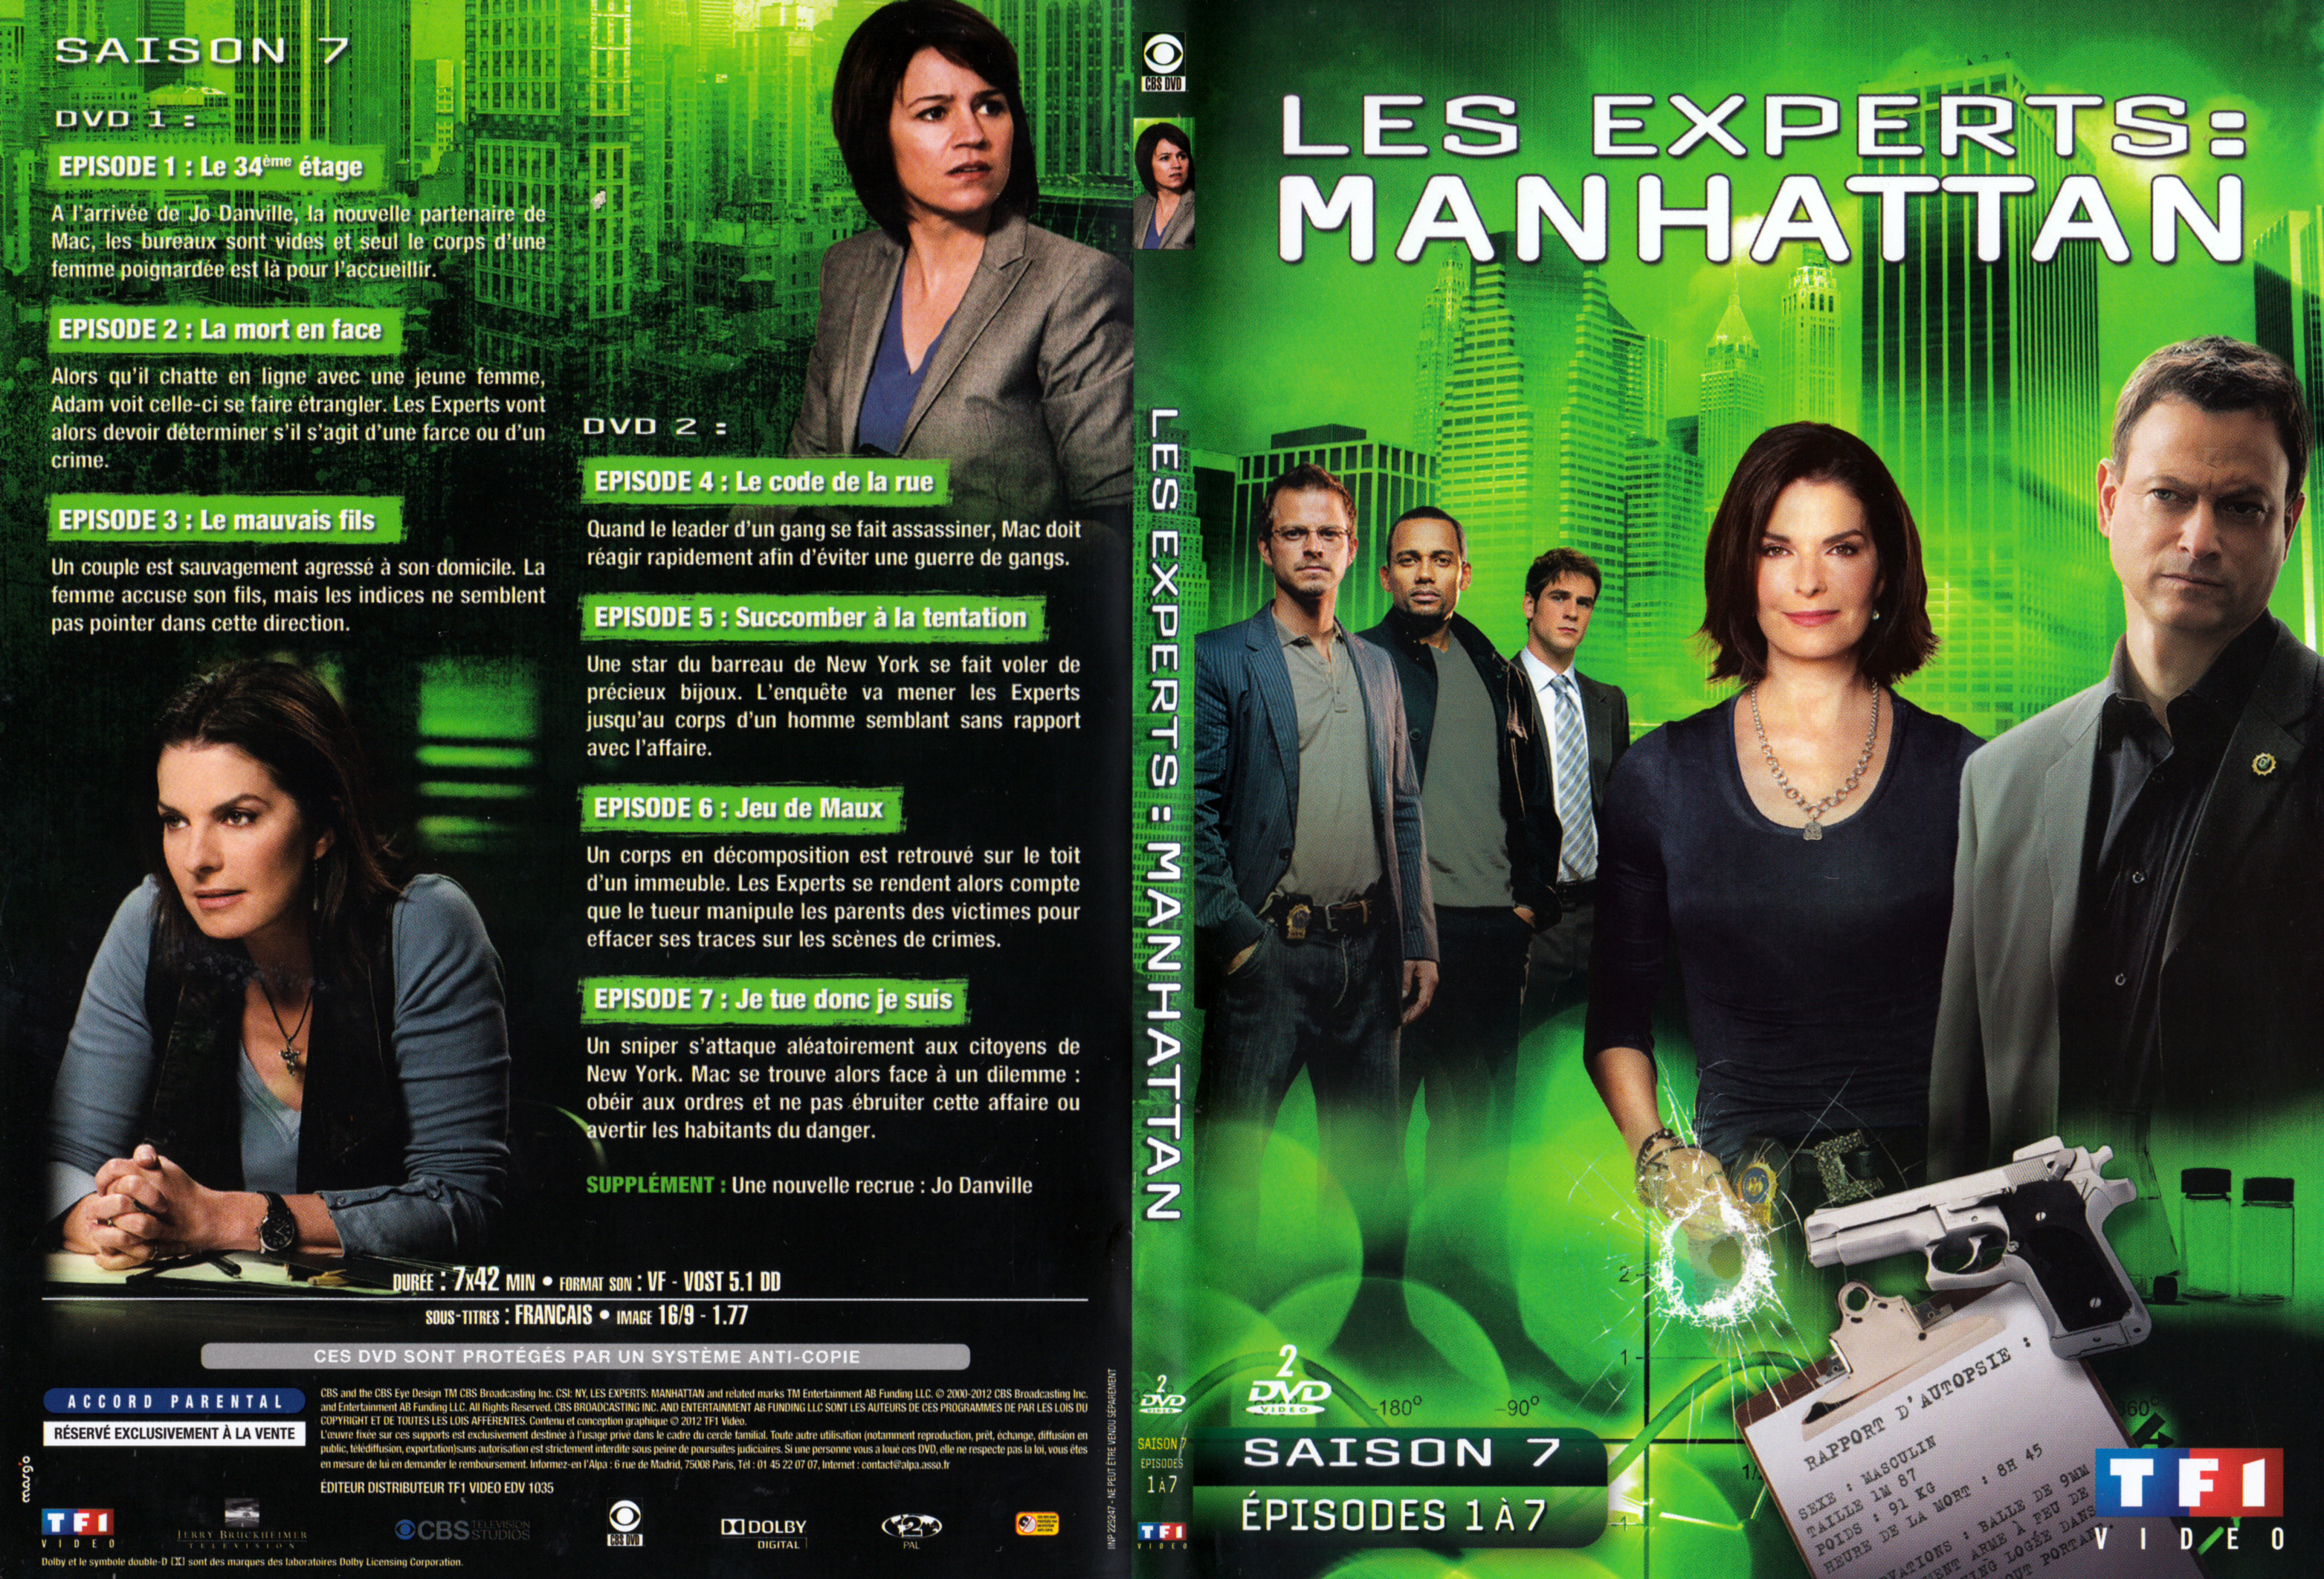 Jaquette DVD Les Experts Manhattan Saison 7 DVD 1